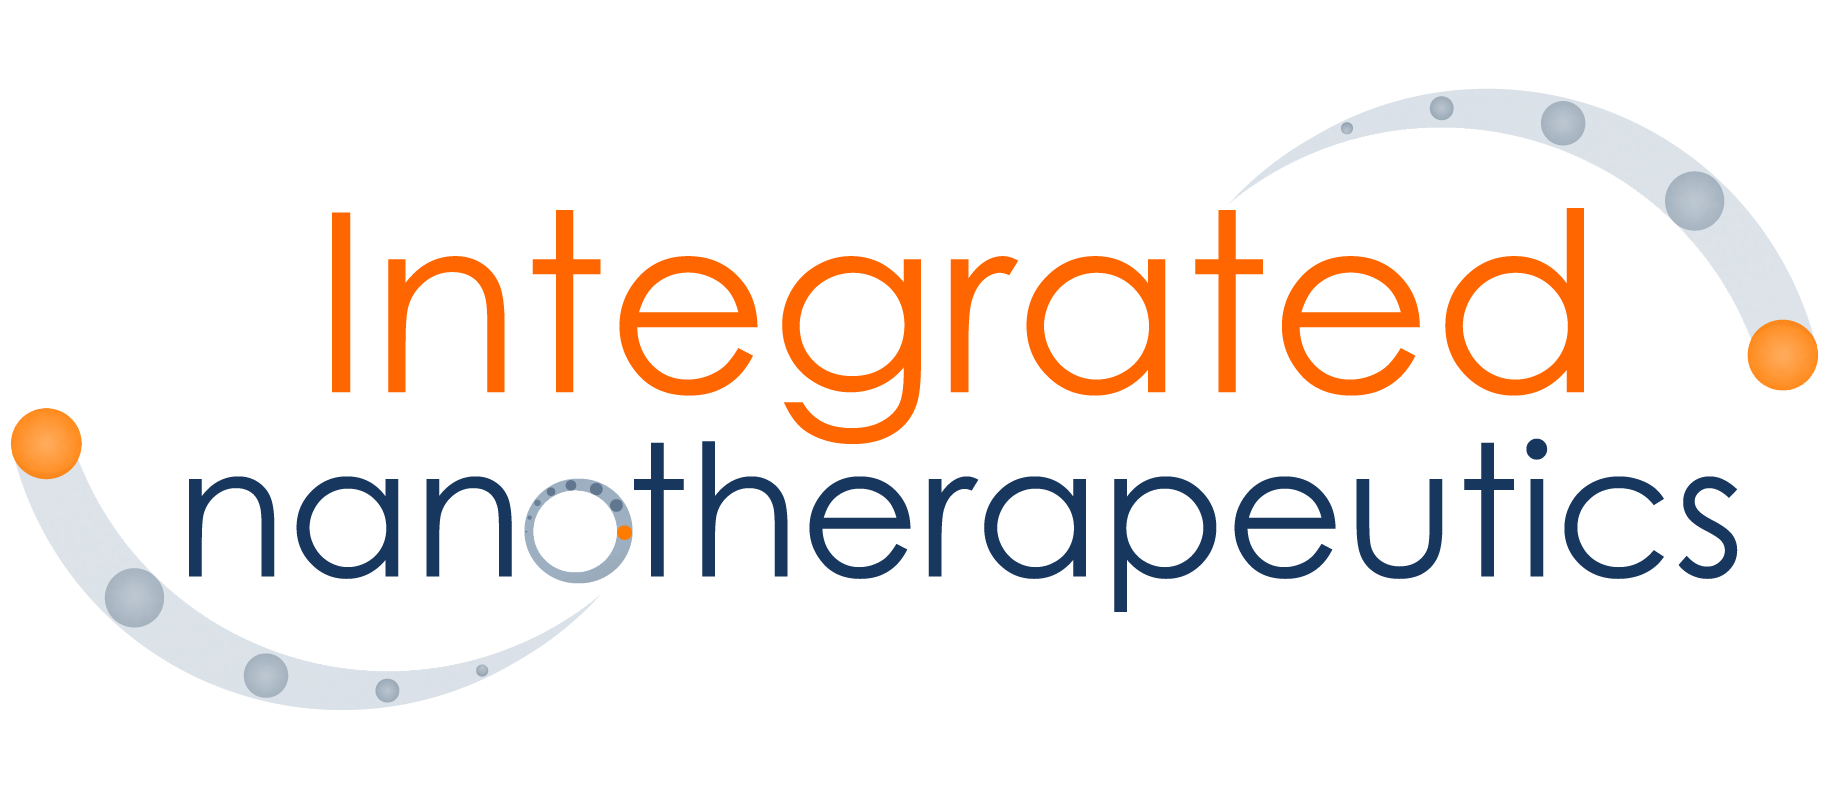 Integrated_Nanotherapeutics_Logo-companies-attending